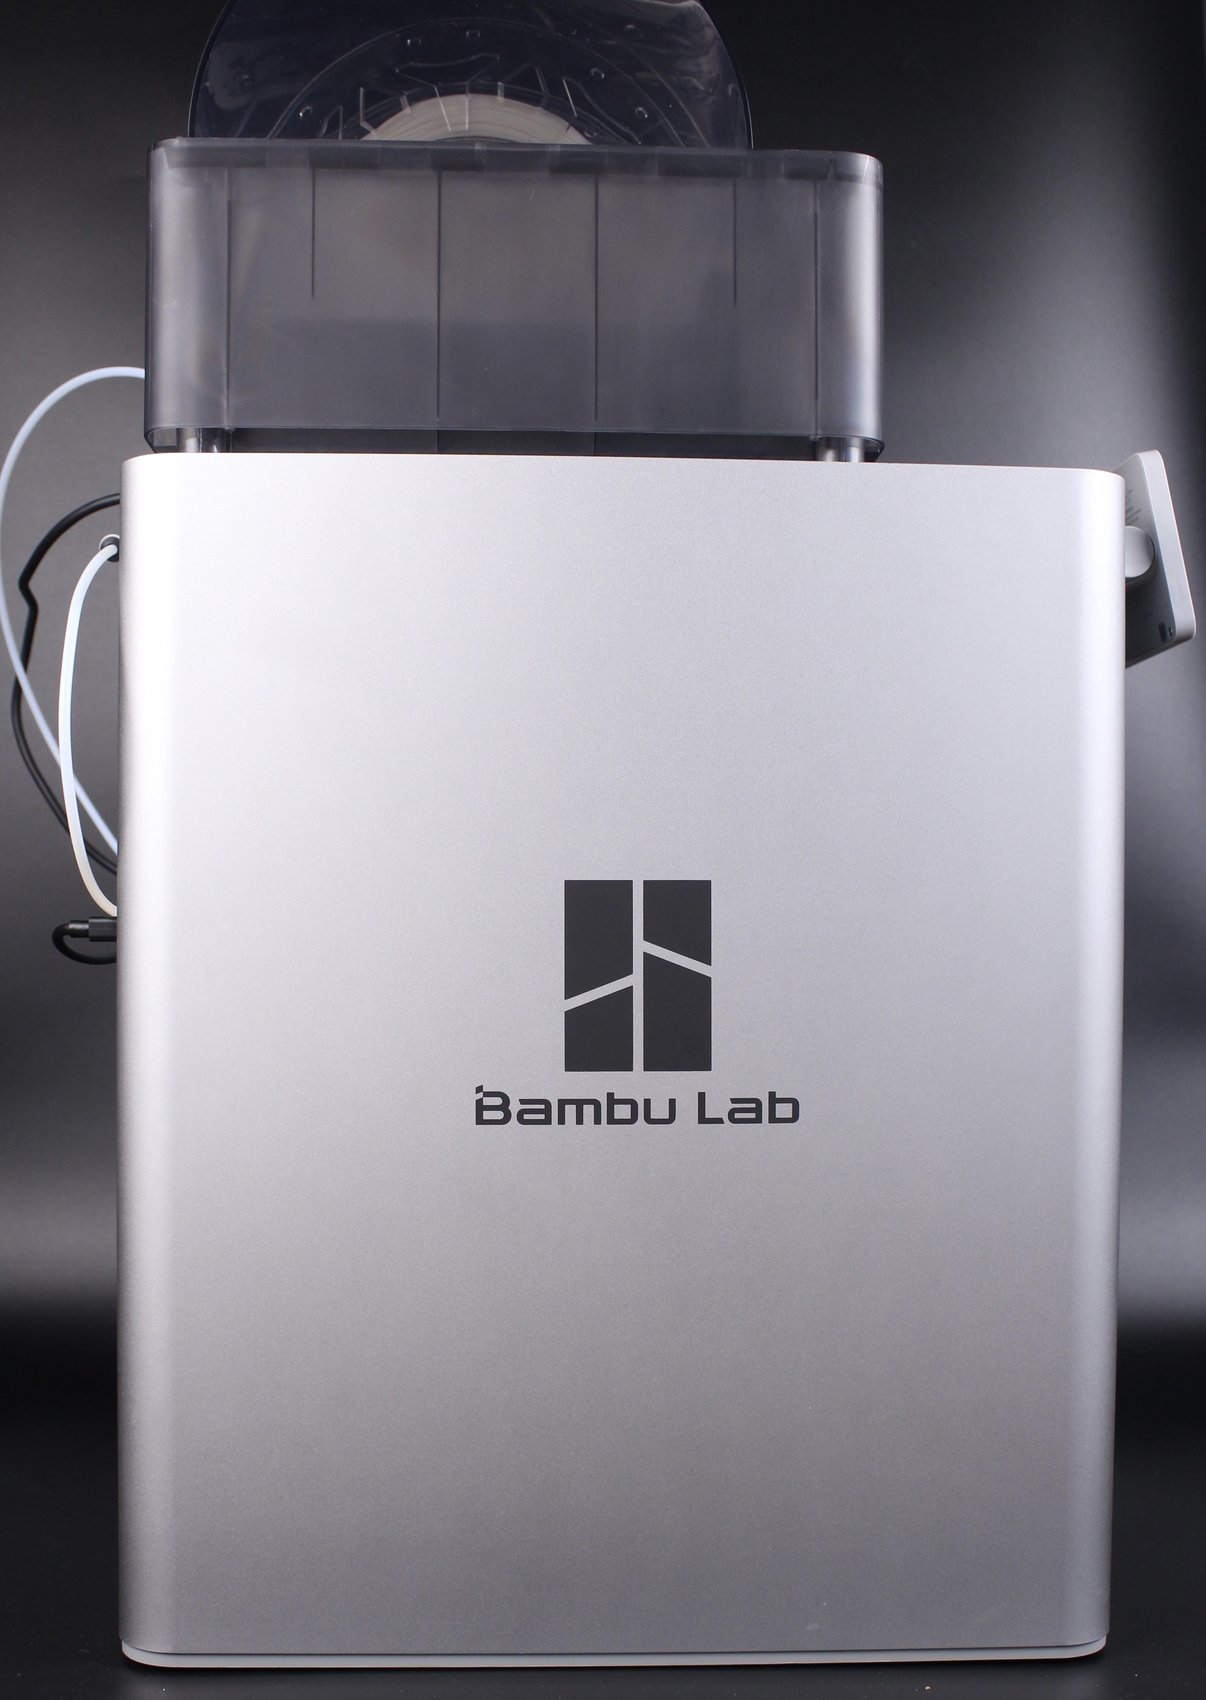 Bambu Lab X1 Carbon Design5 | Bambu Lab X1 Carbon Review: Living in the Future